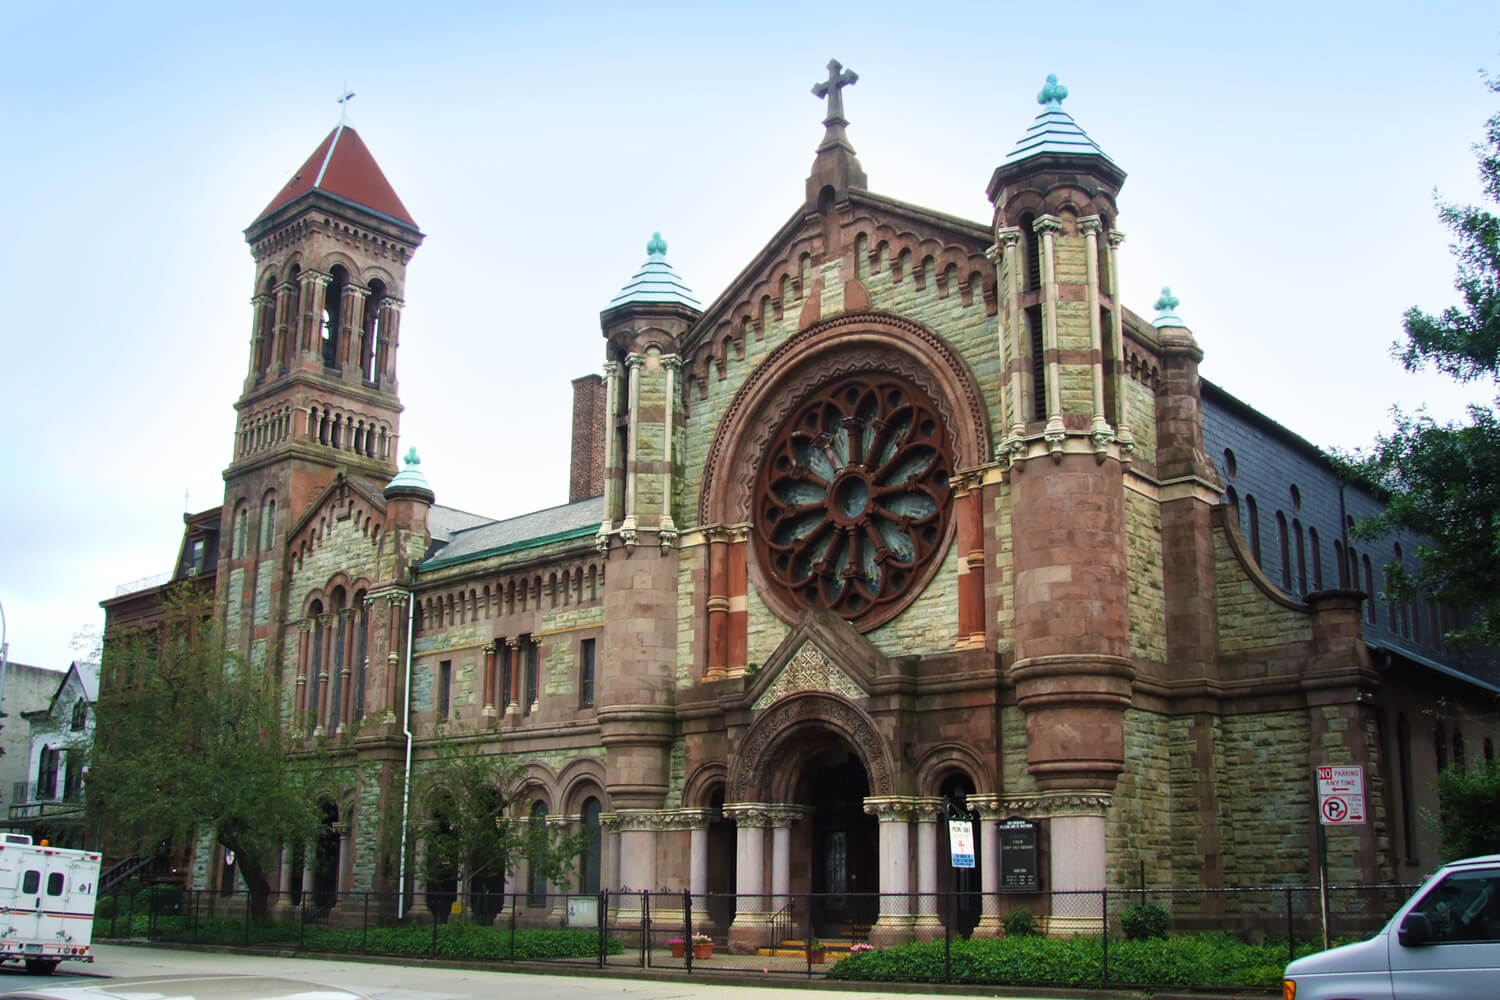 Romanesque Revival Architecture